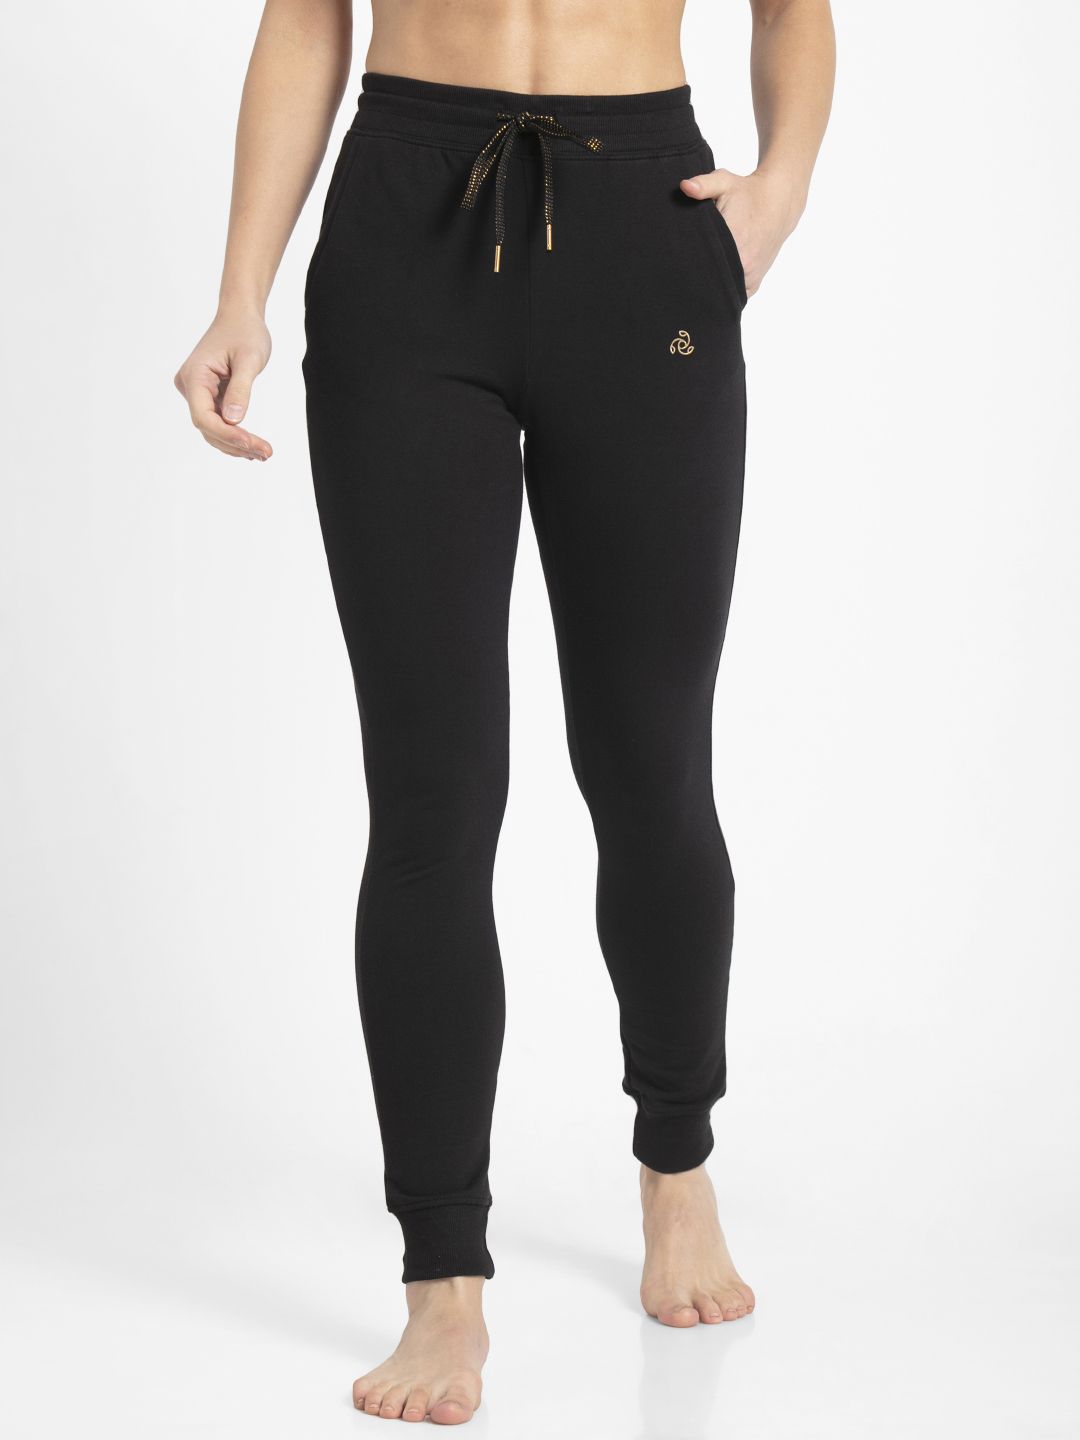 Jockey Women Black Slim Fit Lounge Pants 1323 Price in India